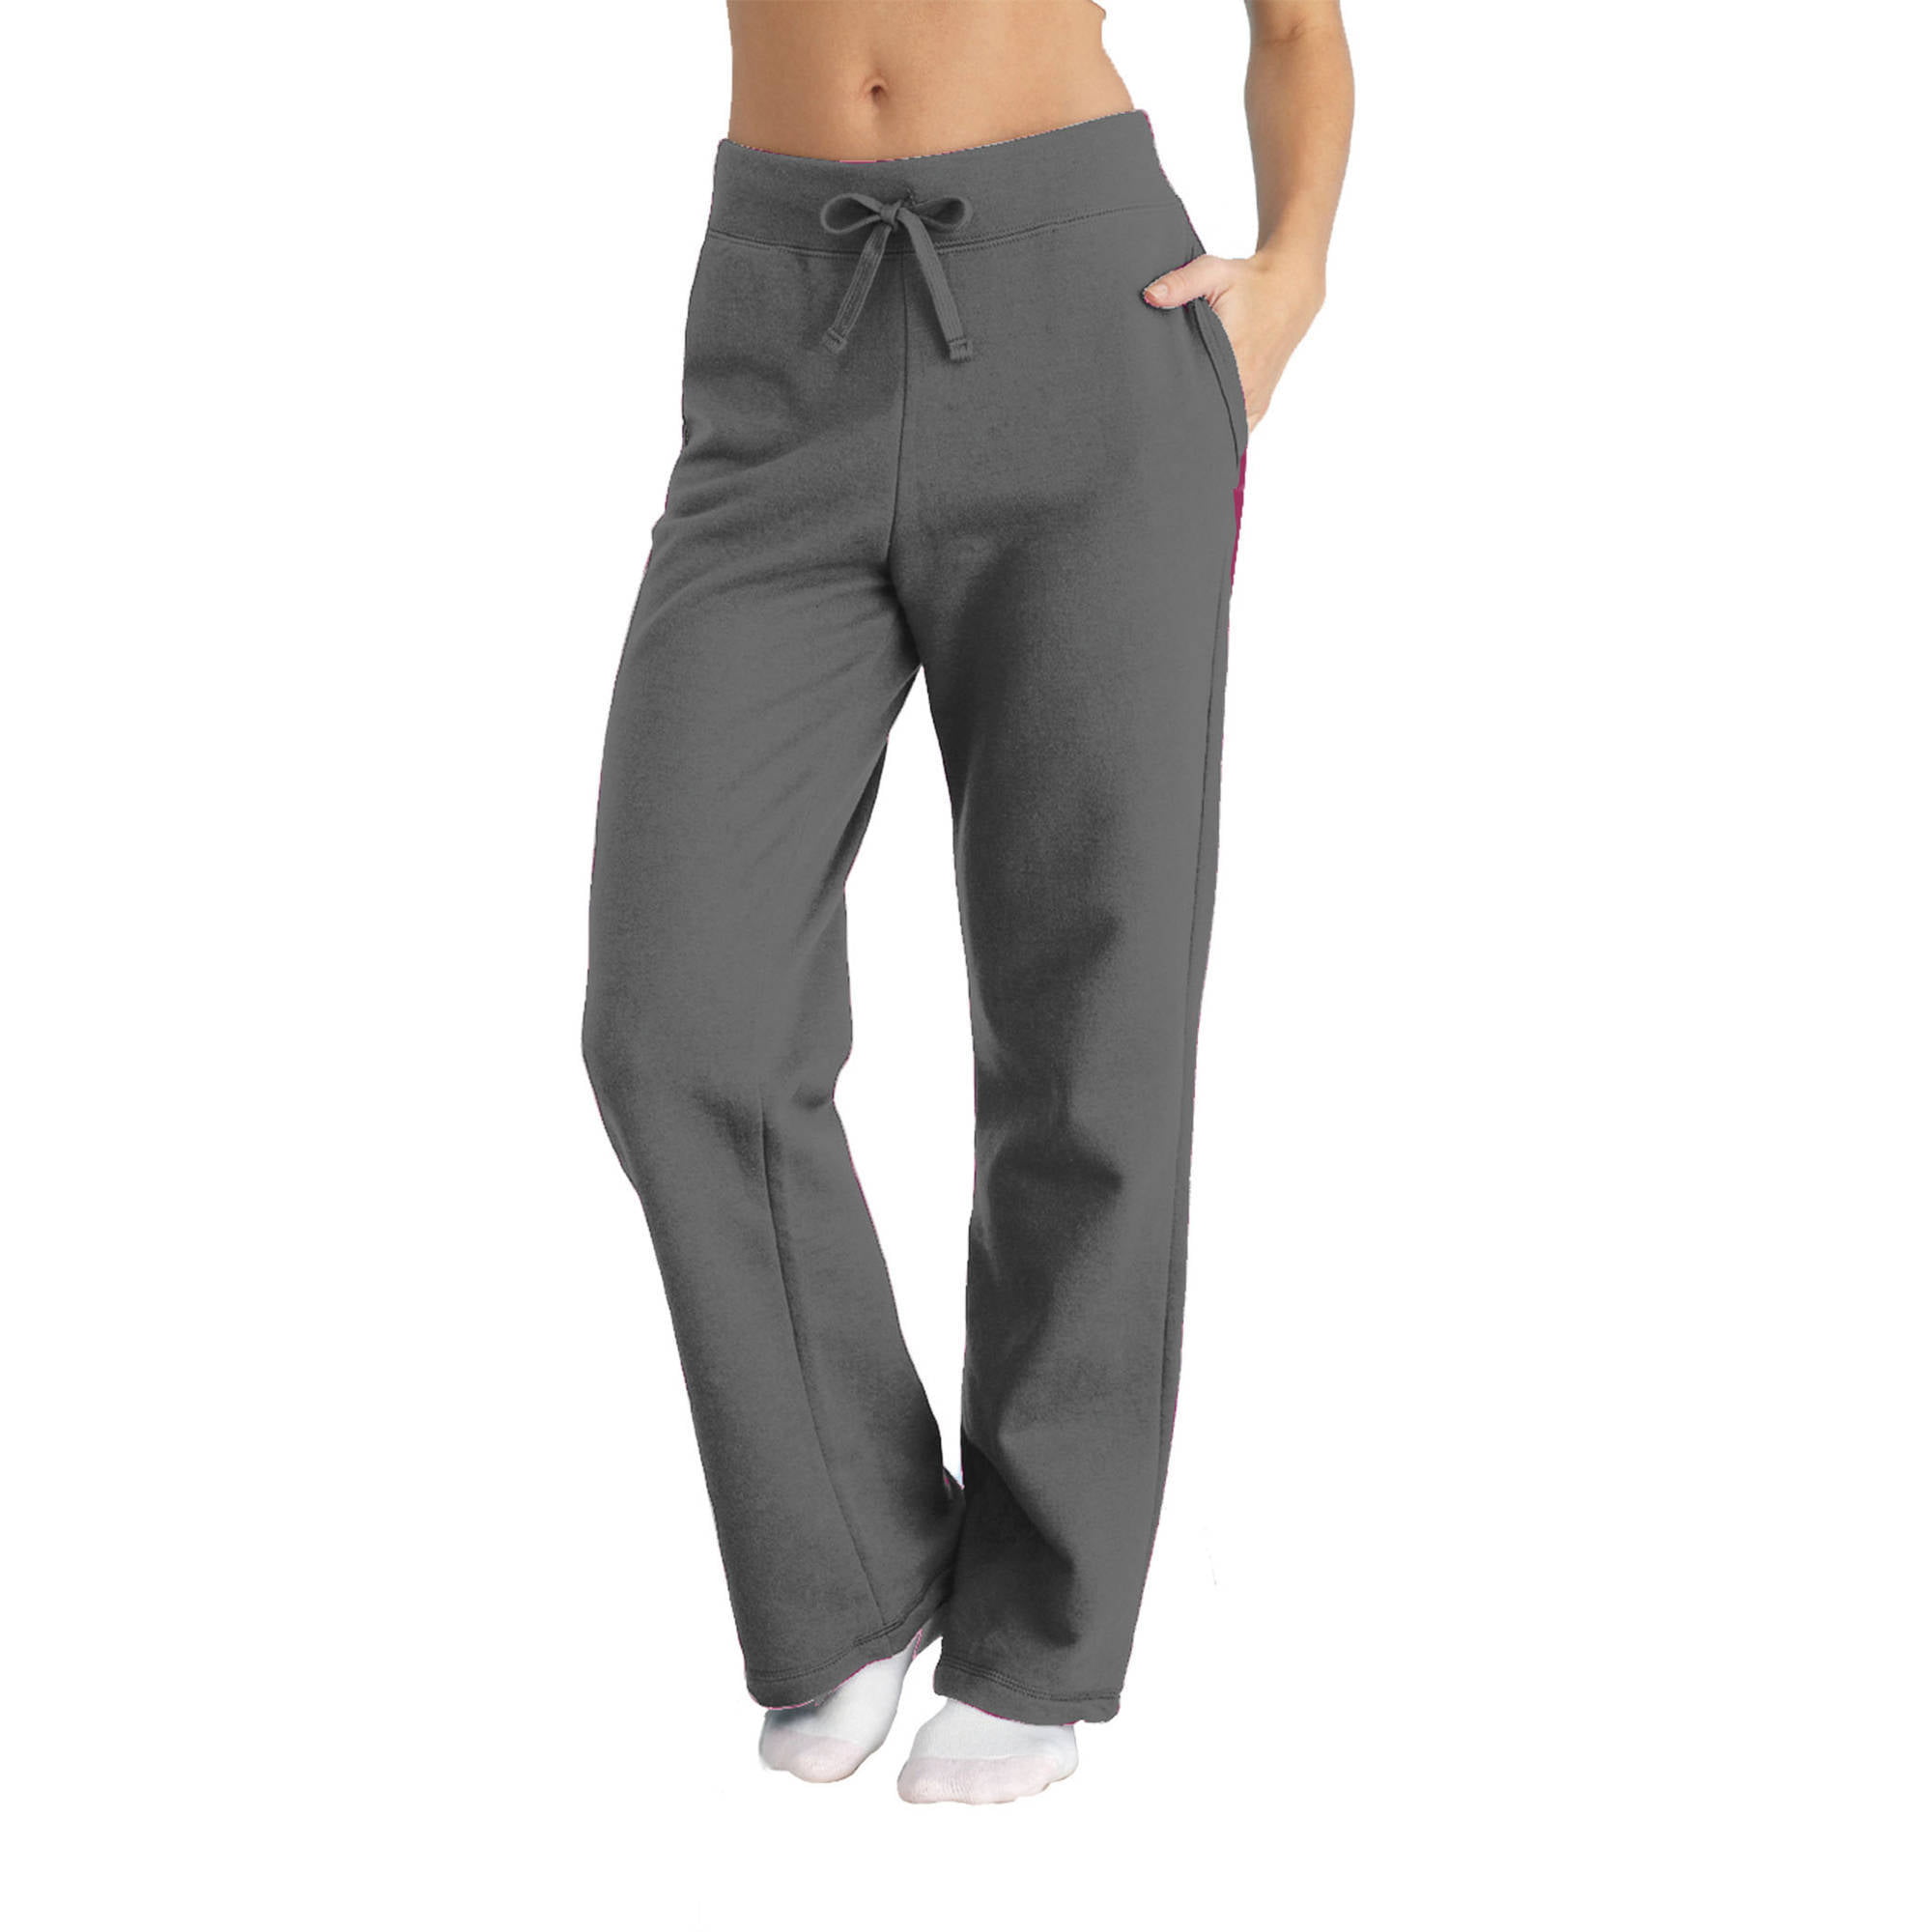 Buy > women's gildan sweatpants > in stock